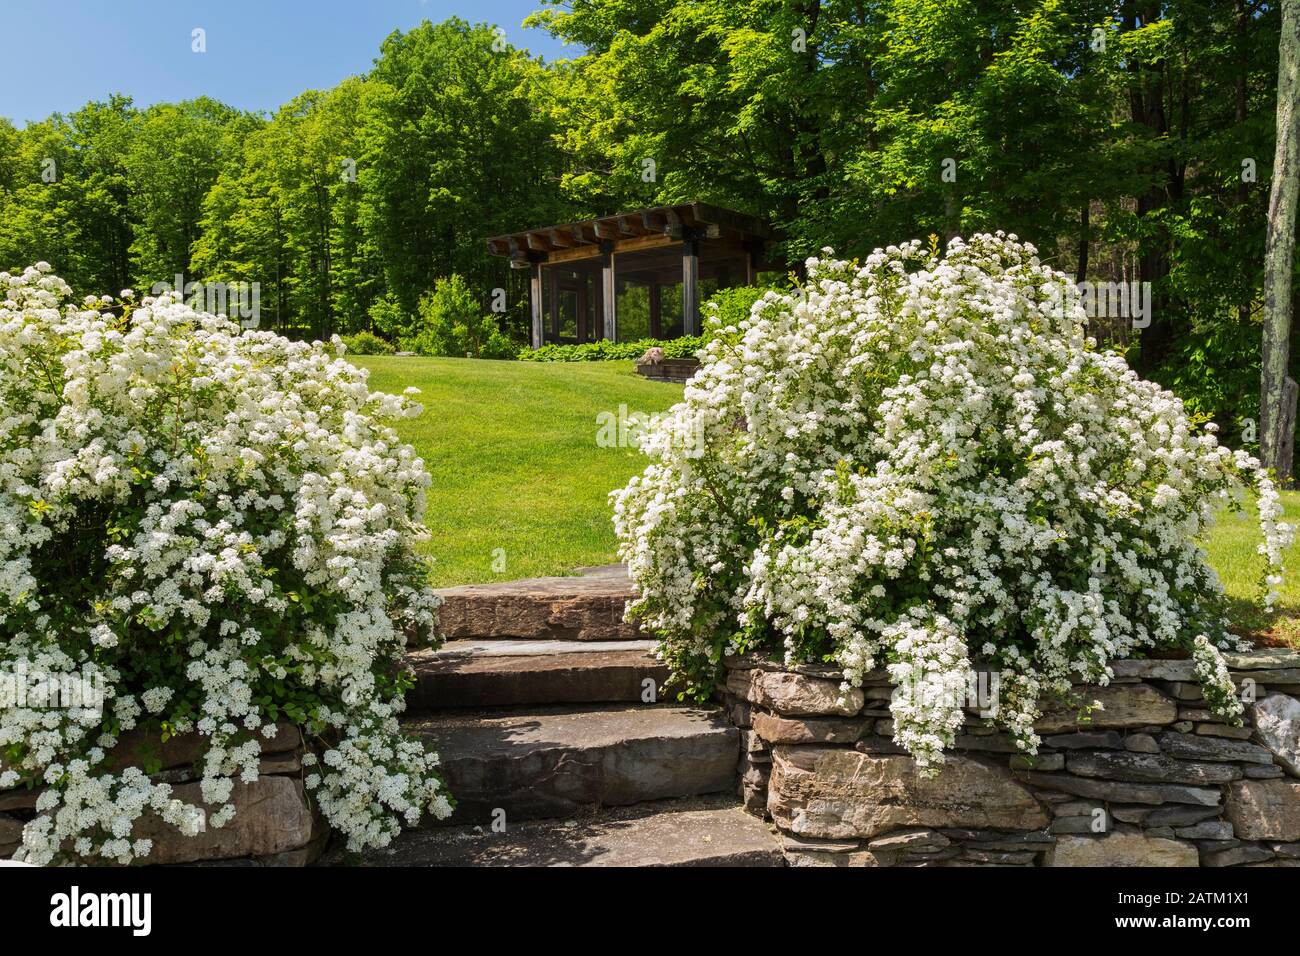 Natural stone steps and wall bordered by white flowering Spiraea prunifolia 'Bridal Wreath' - Spirea shrubs in residential backyard garden with gazebo. Stock Photo